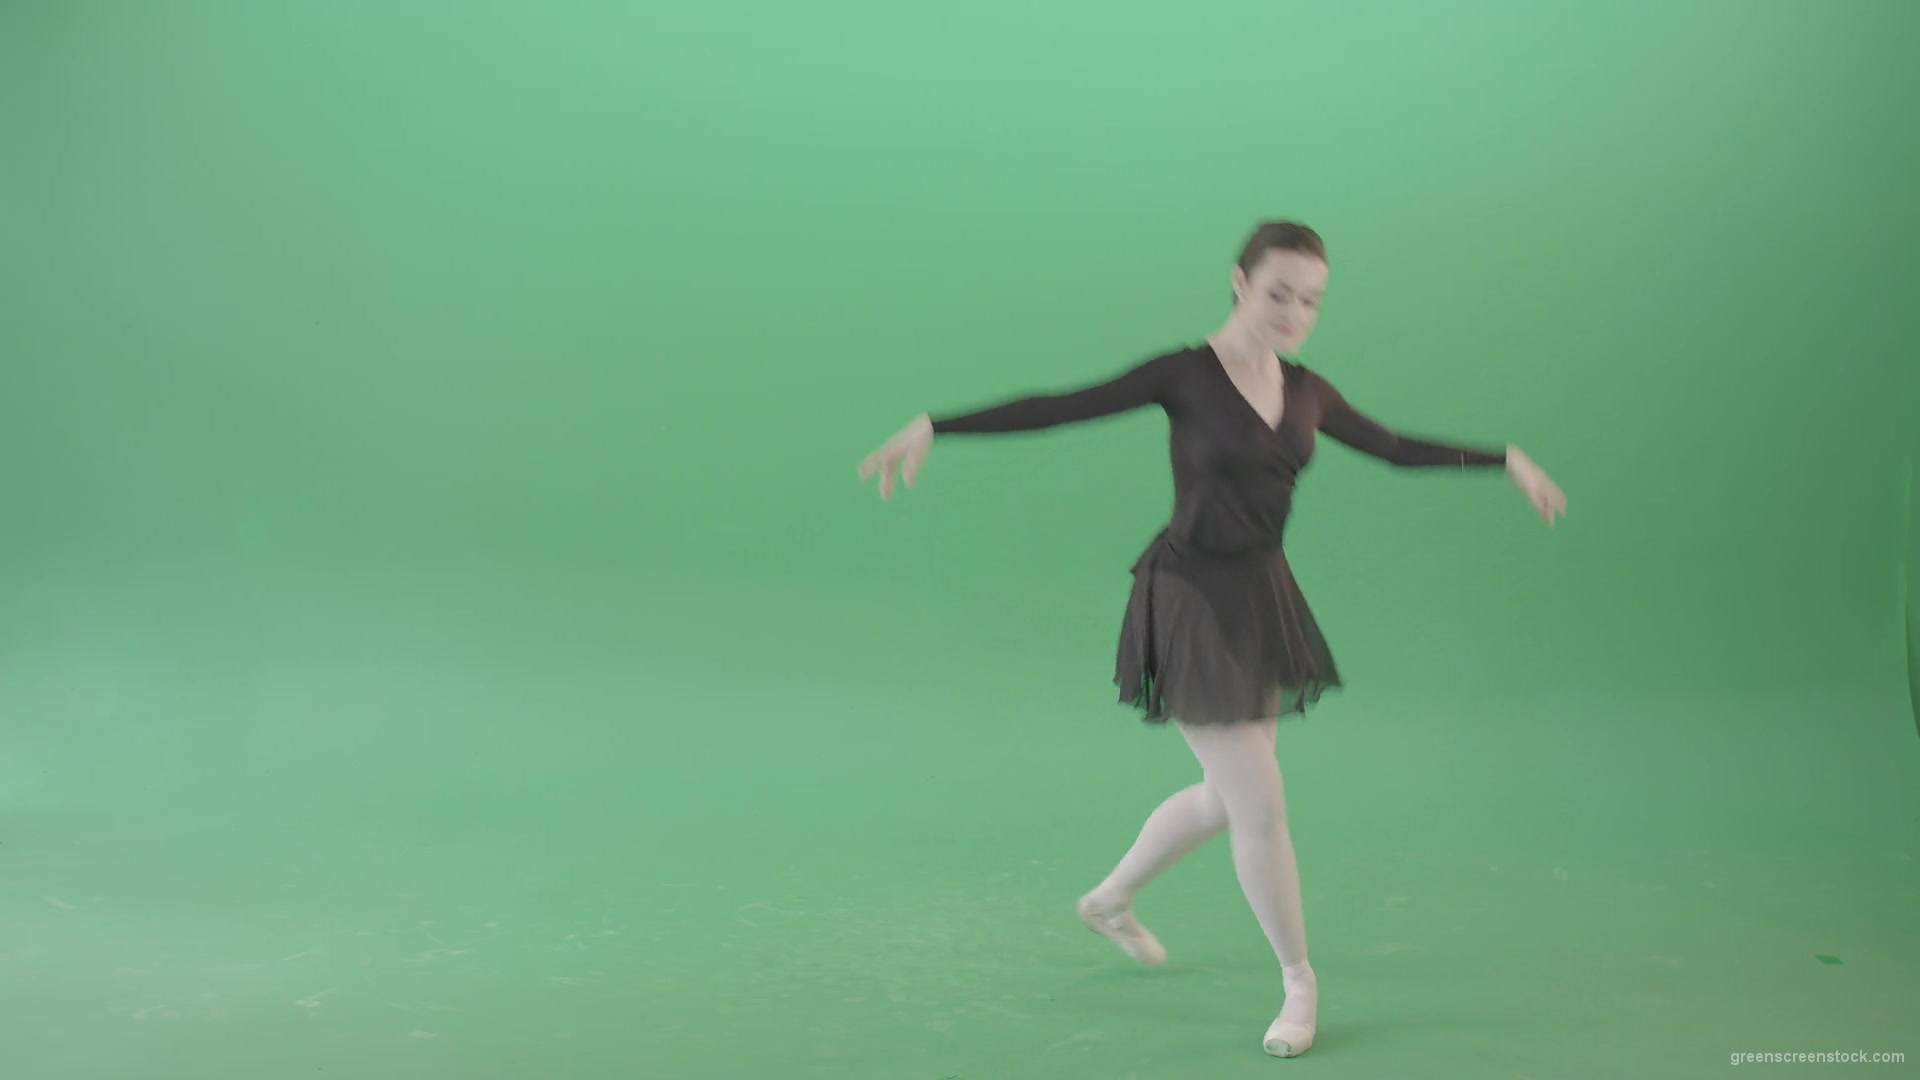 Green-Screen-Ballet-Girl-Ballering-makes-bow-reverence-in-black-dress-4K-Video-Footage-1920_006 Green Screen Stock